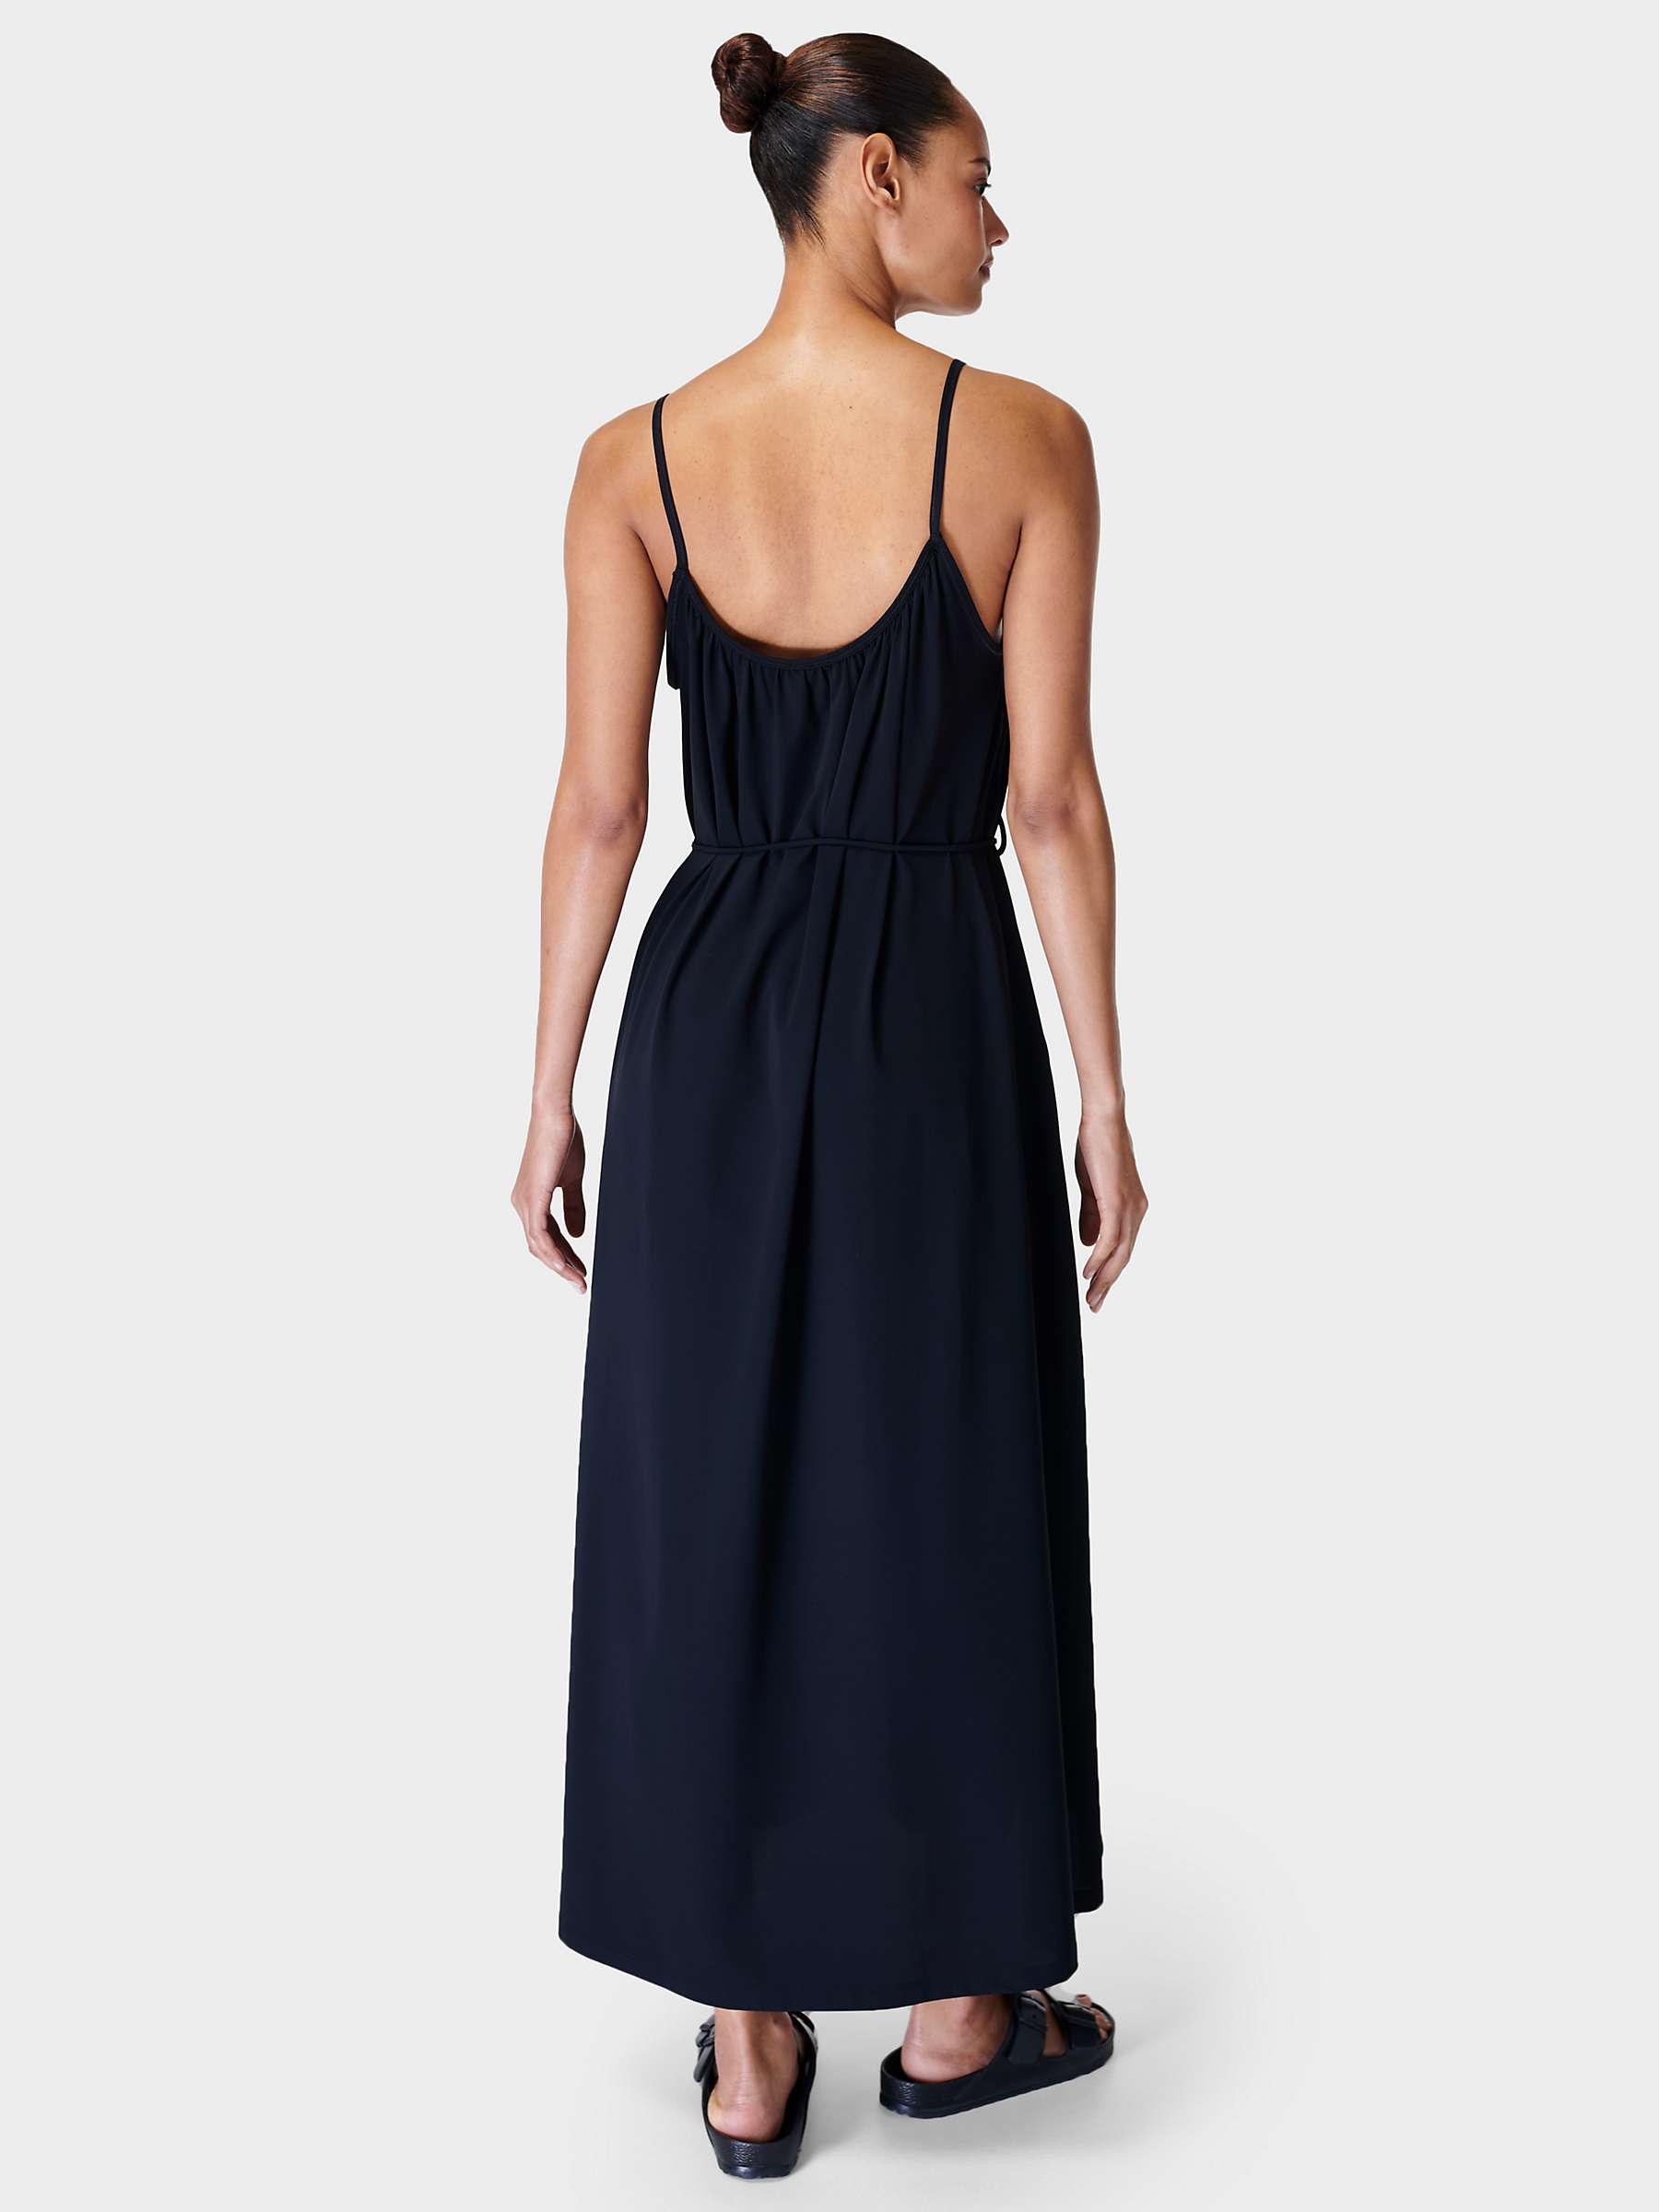 Sweaty Betty Explore Strappy Summer Dress, Black at John Lewis & Partners